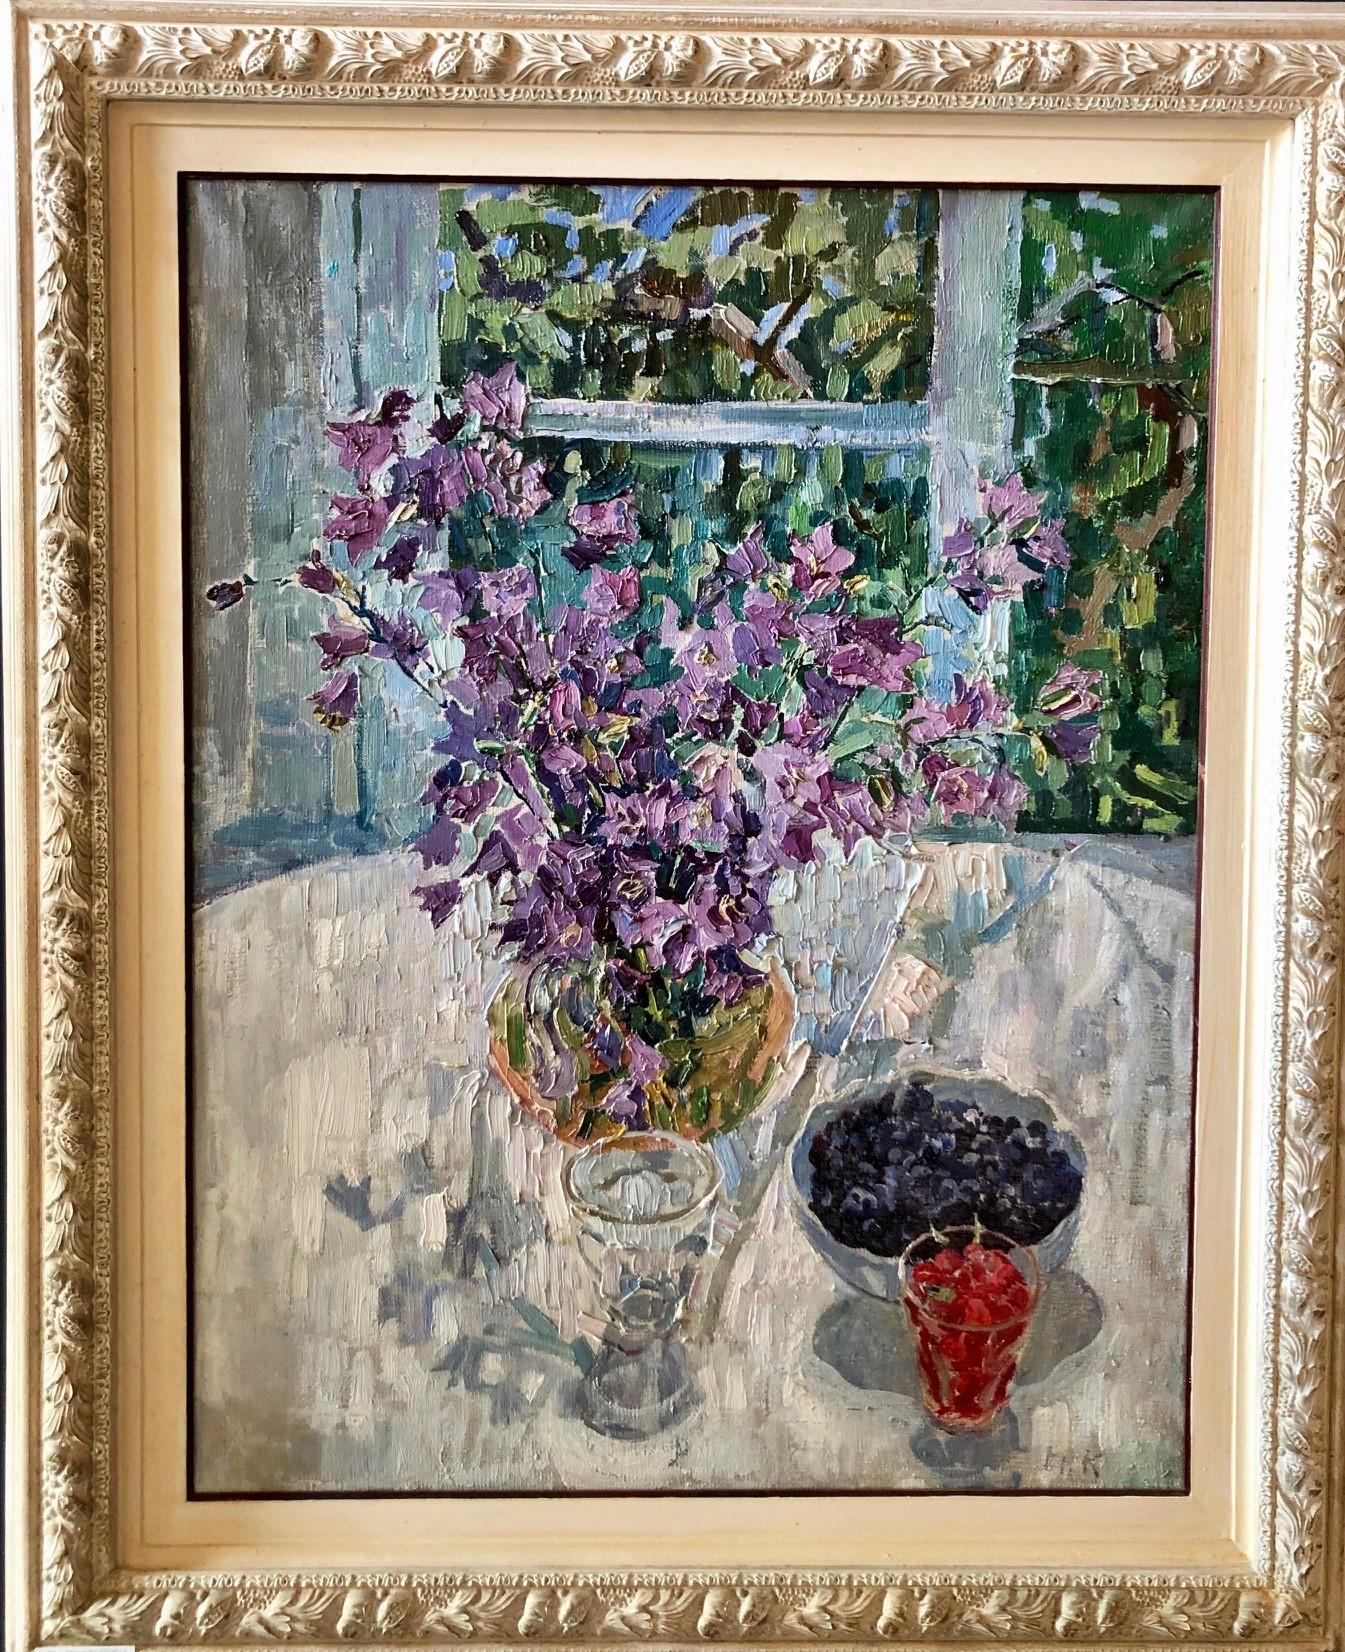 Maya KOPITZEVA Figurative Painting - Flowers near the window , Purple bellflowers, berries, window  Oil 